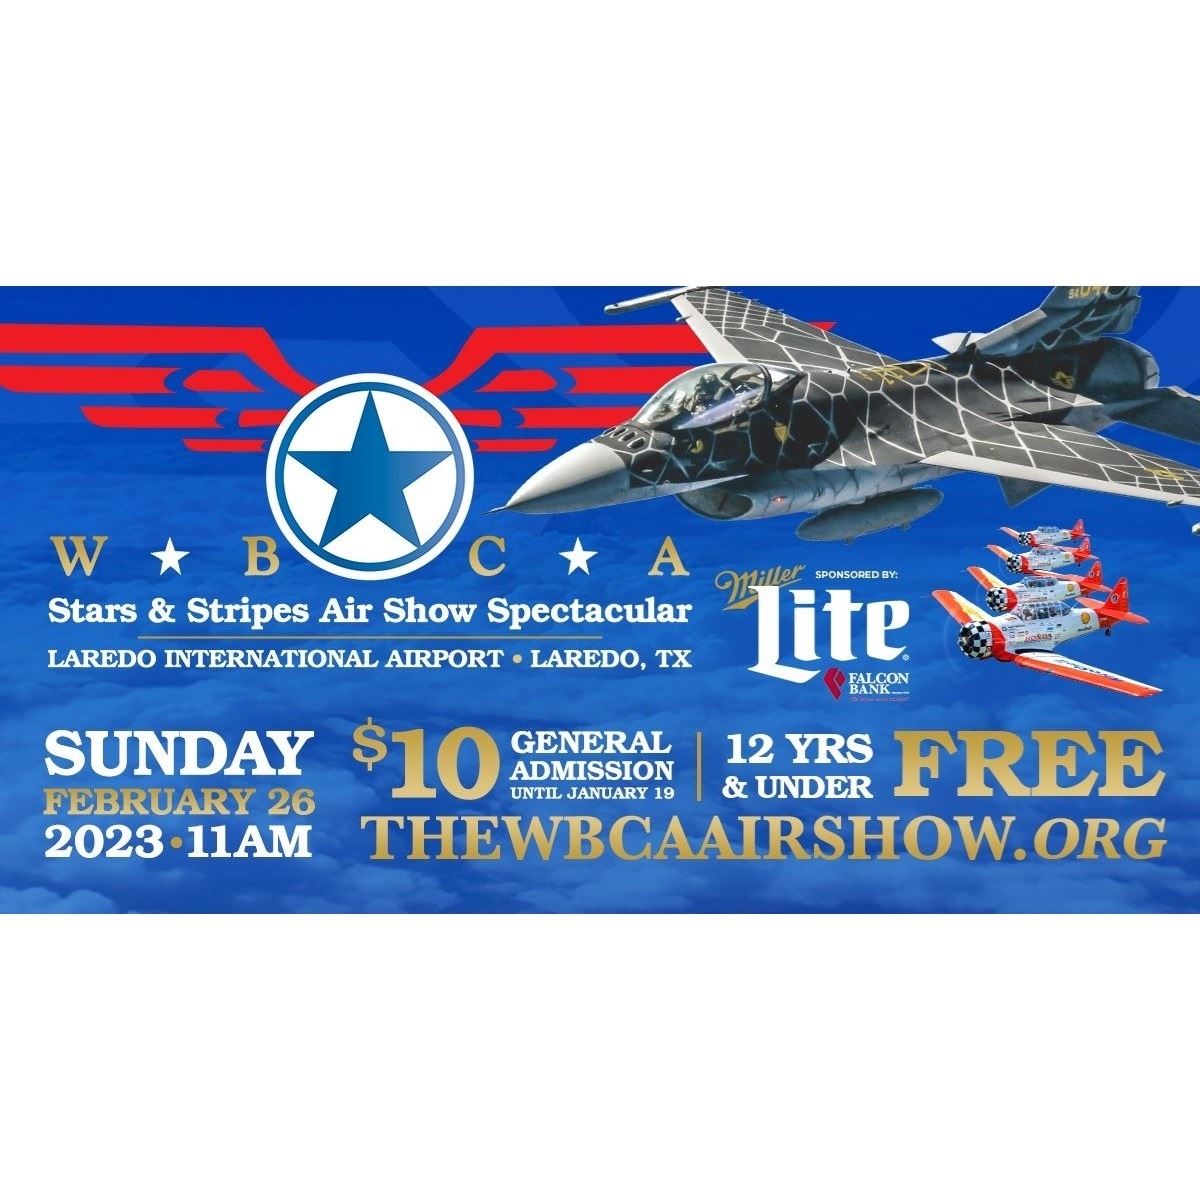 WBCA Stars & Stripes Air Show Spectacular Sponsored by Miller Lite